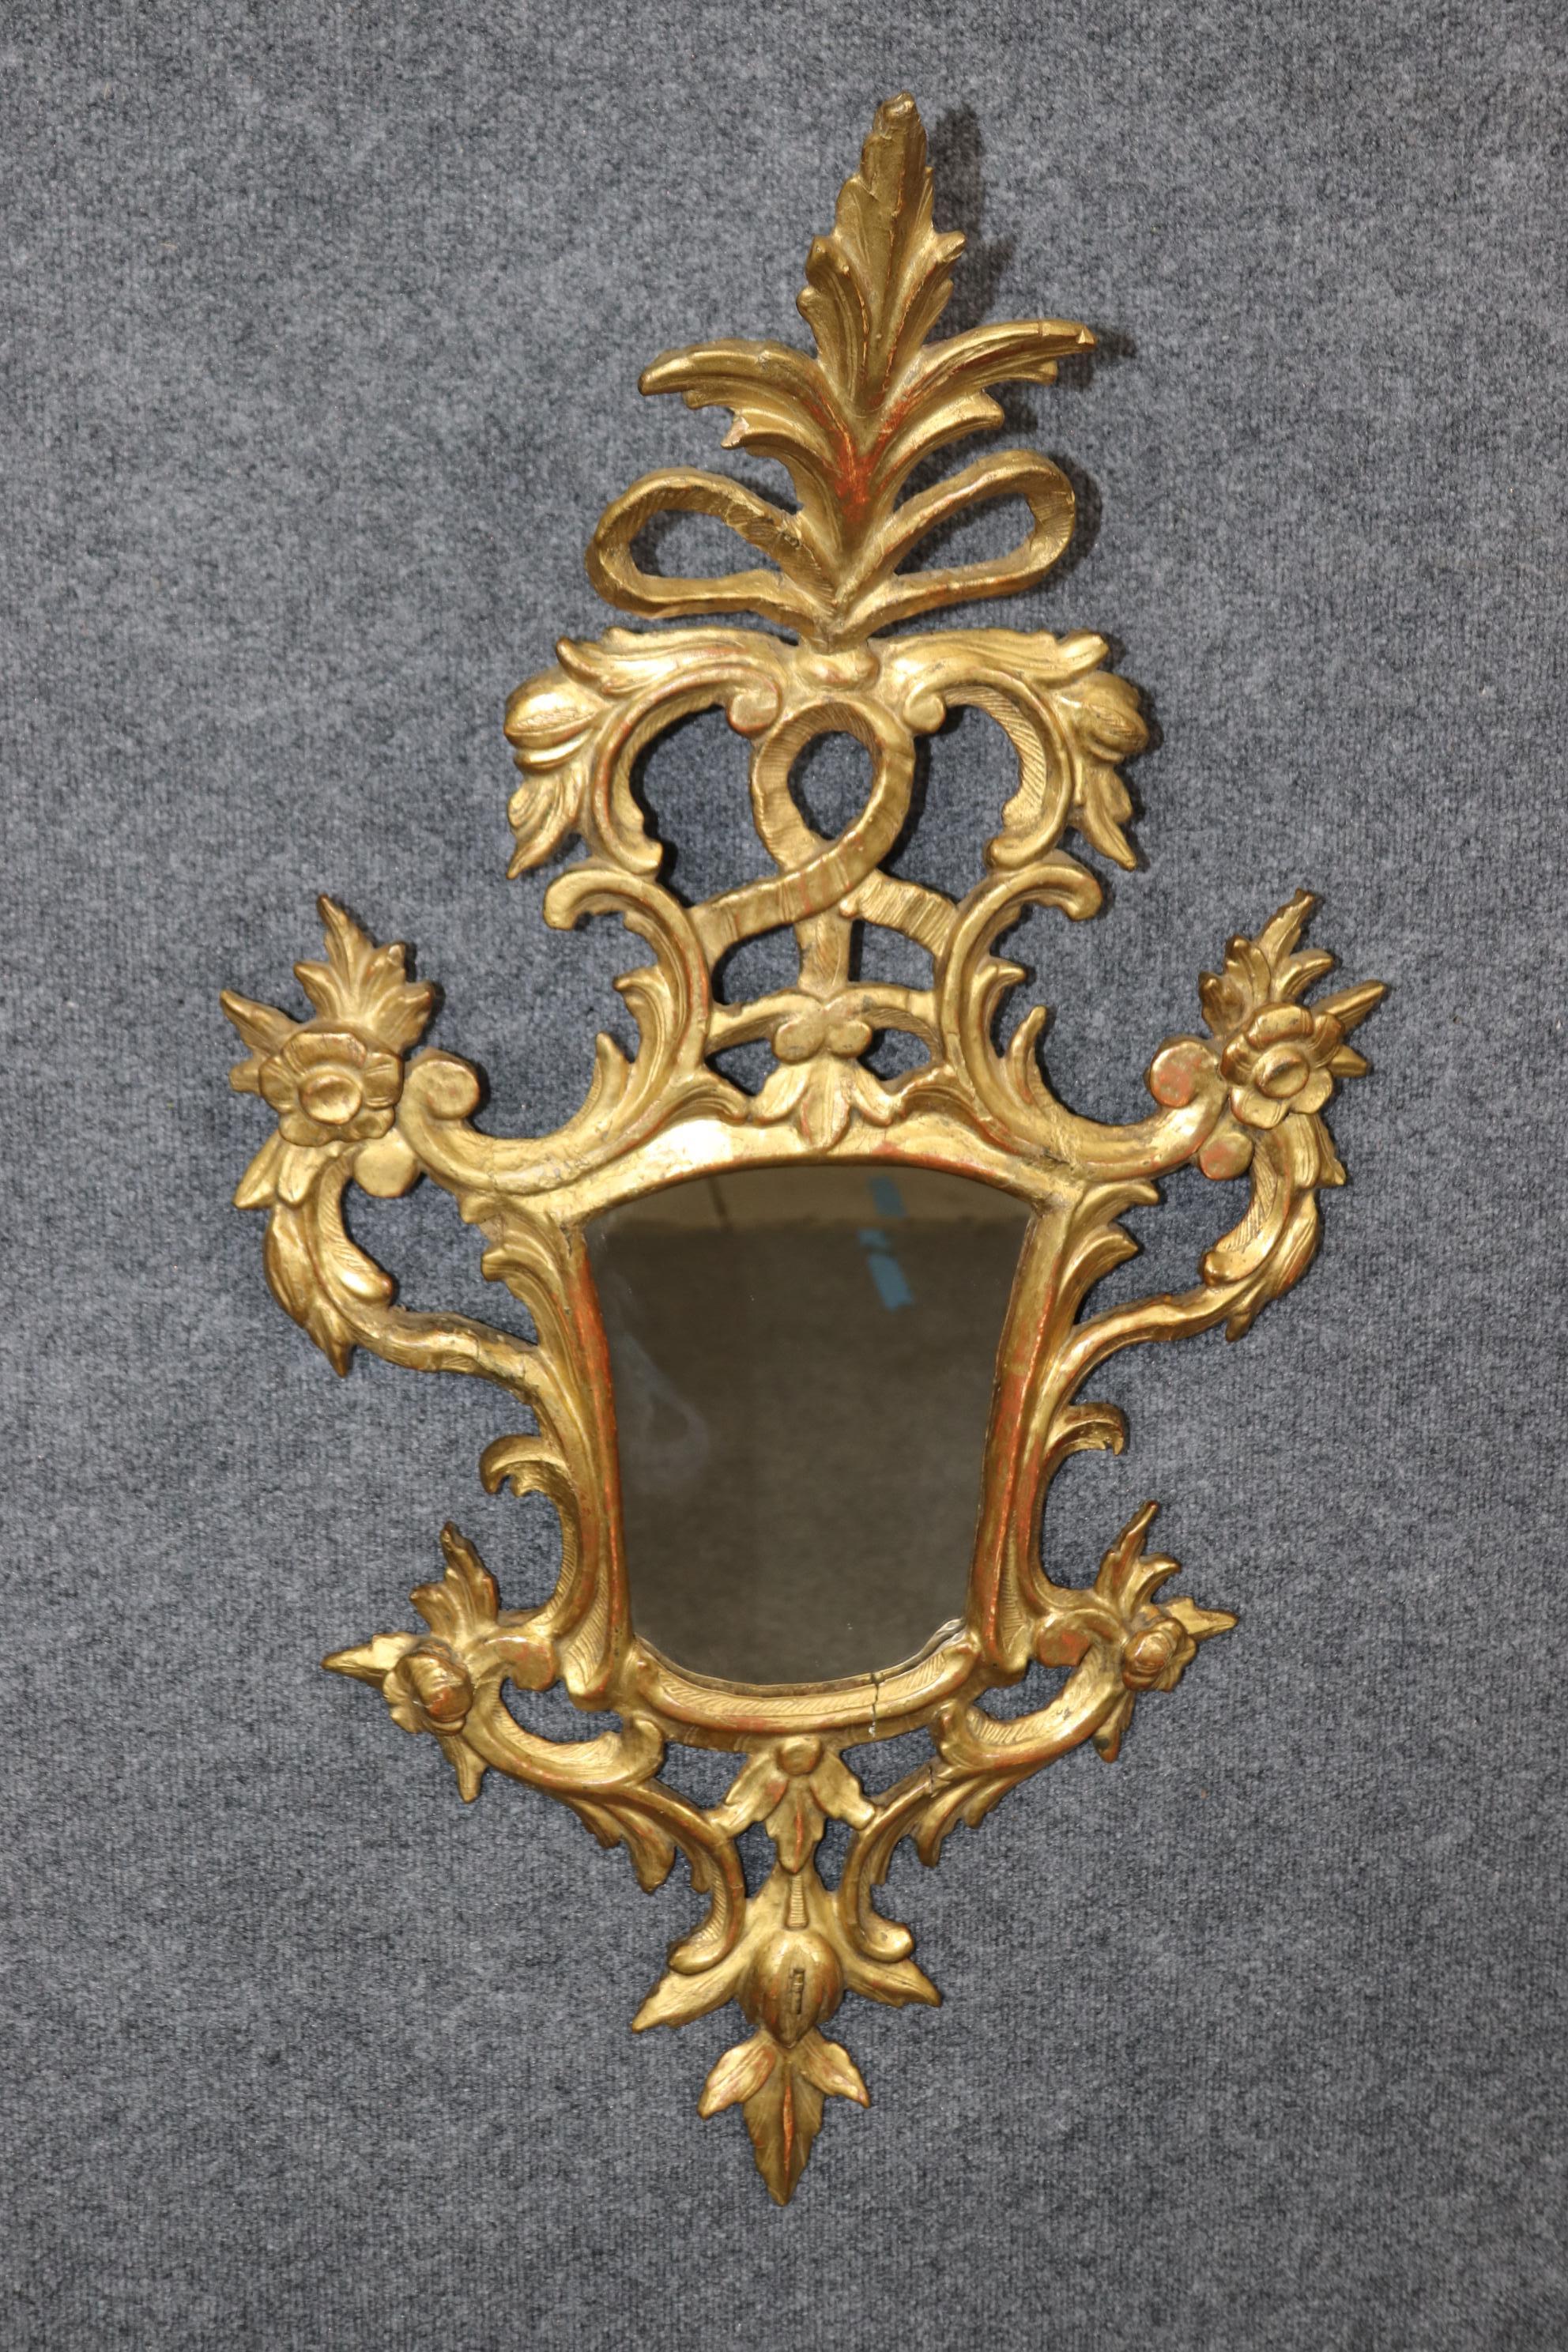 Fantastic Diminutive Water Gilded Carved Italian Rococo Mirrors Circa 1820s In Good Condition For Sale In Swedesboro, NJ